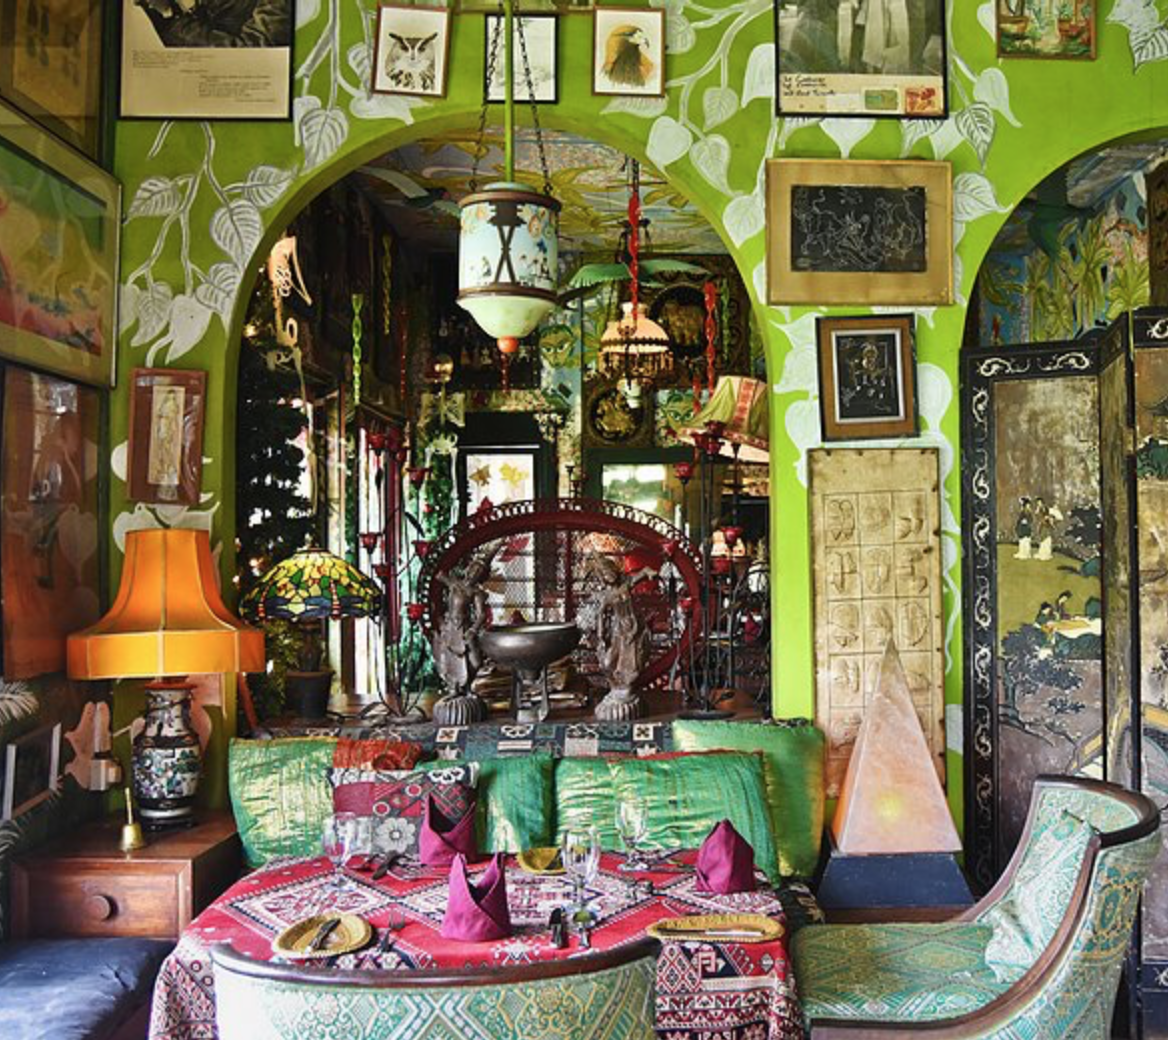 Helga's Folly - a whimsical boutique hotel in Kandy, Sri Lanka